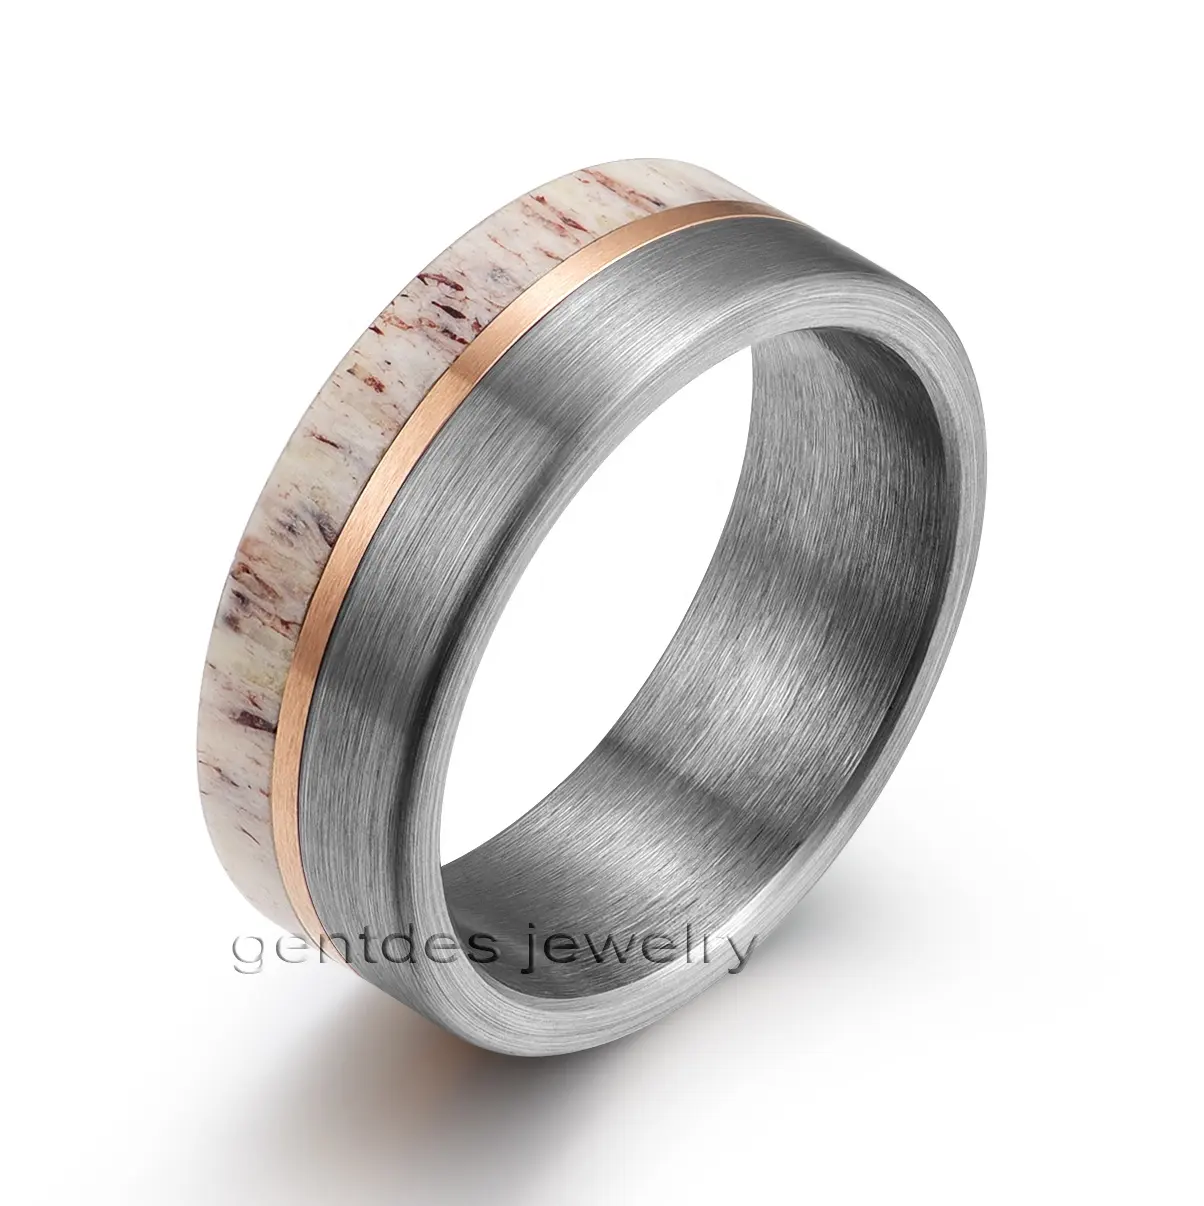 Gentdes Jewelry Silver Tungsten Rose Gold Brushed Wedding Bands Rings for Men Antler Ring 8mm Fine Mens Wedding Bands